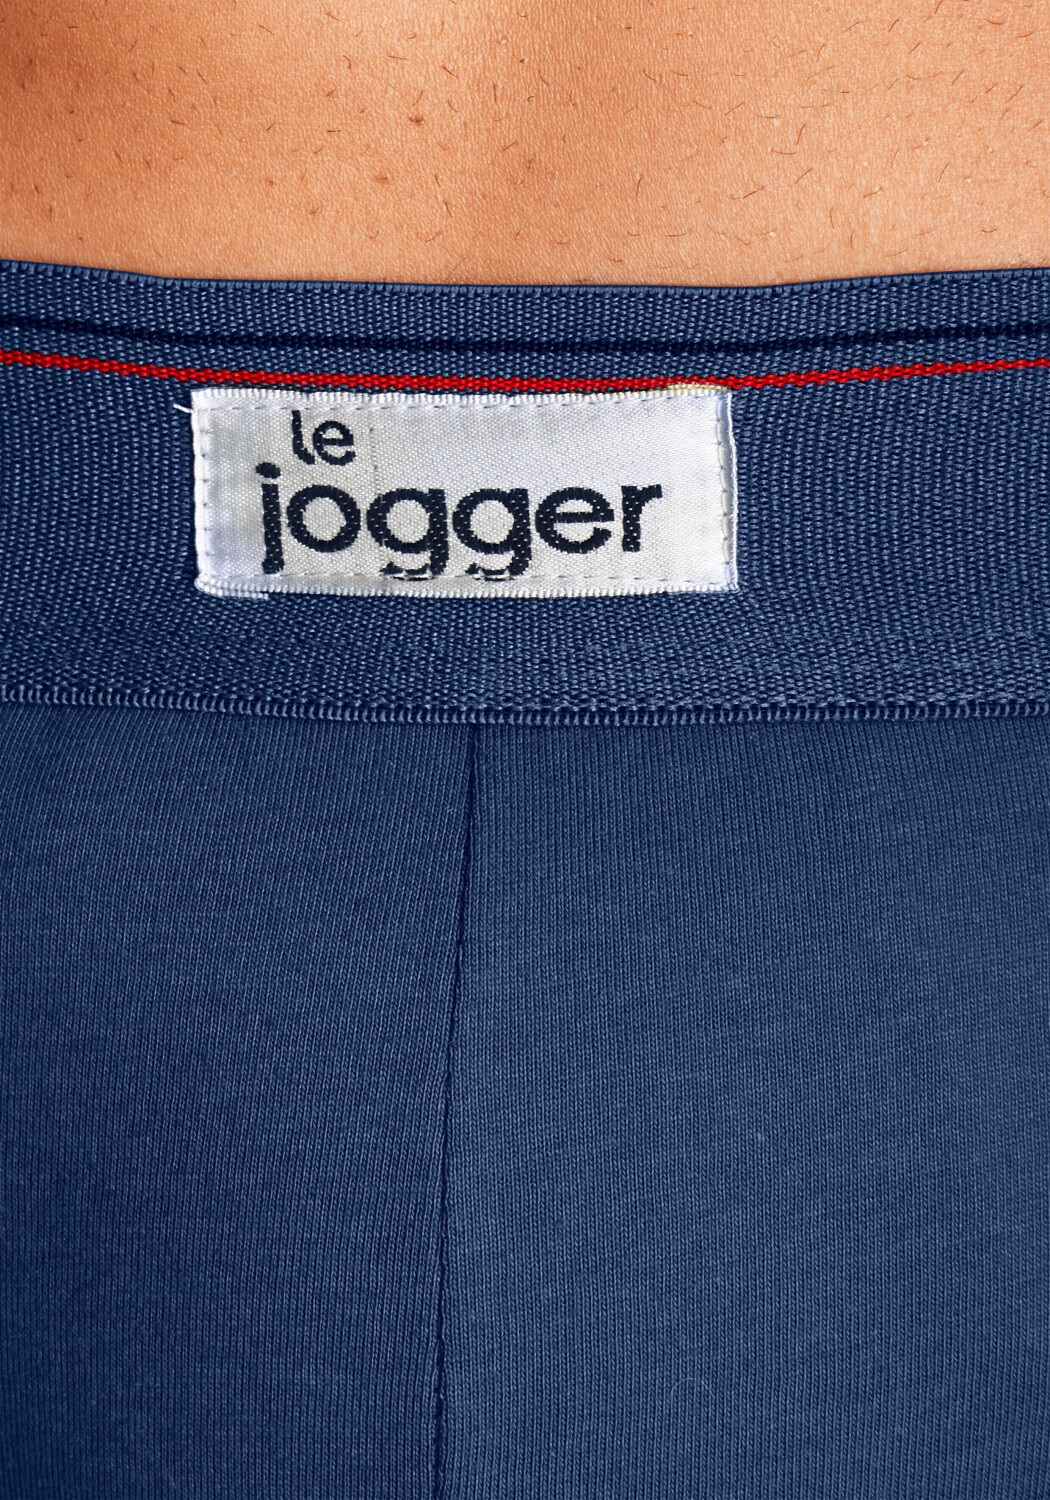 Le Jogger 10-Pack Preisvergleich ab 27,00 bei | multicolour Slips €